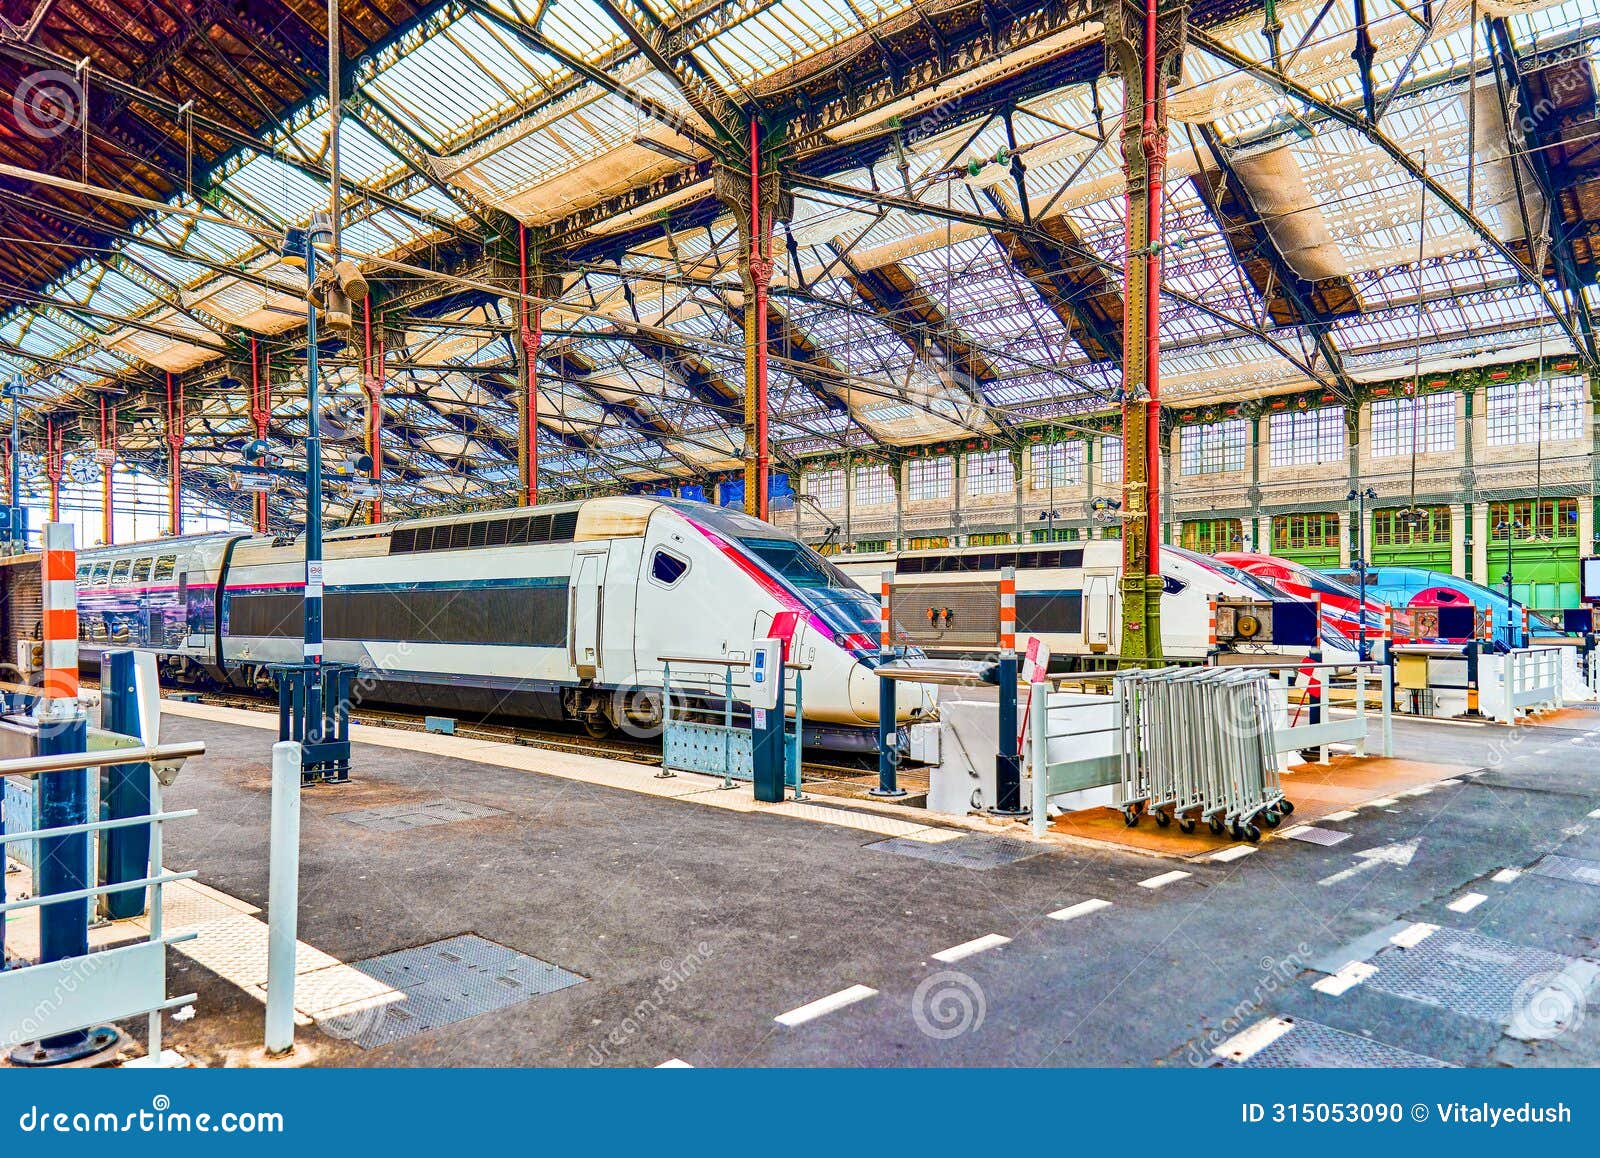 gare de lyon train station in paris